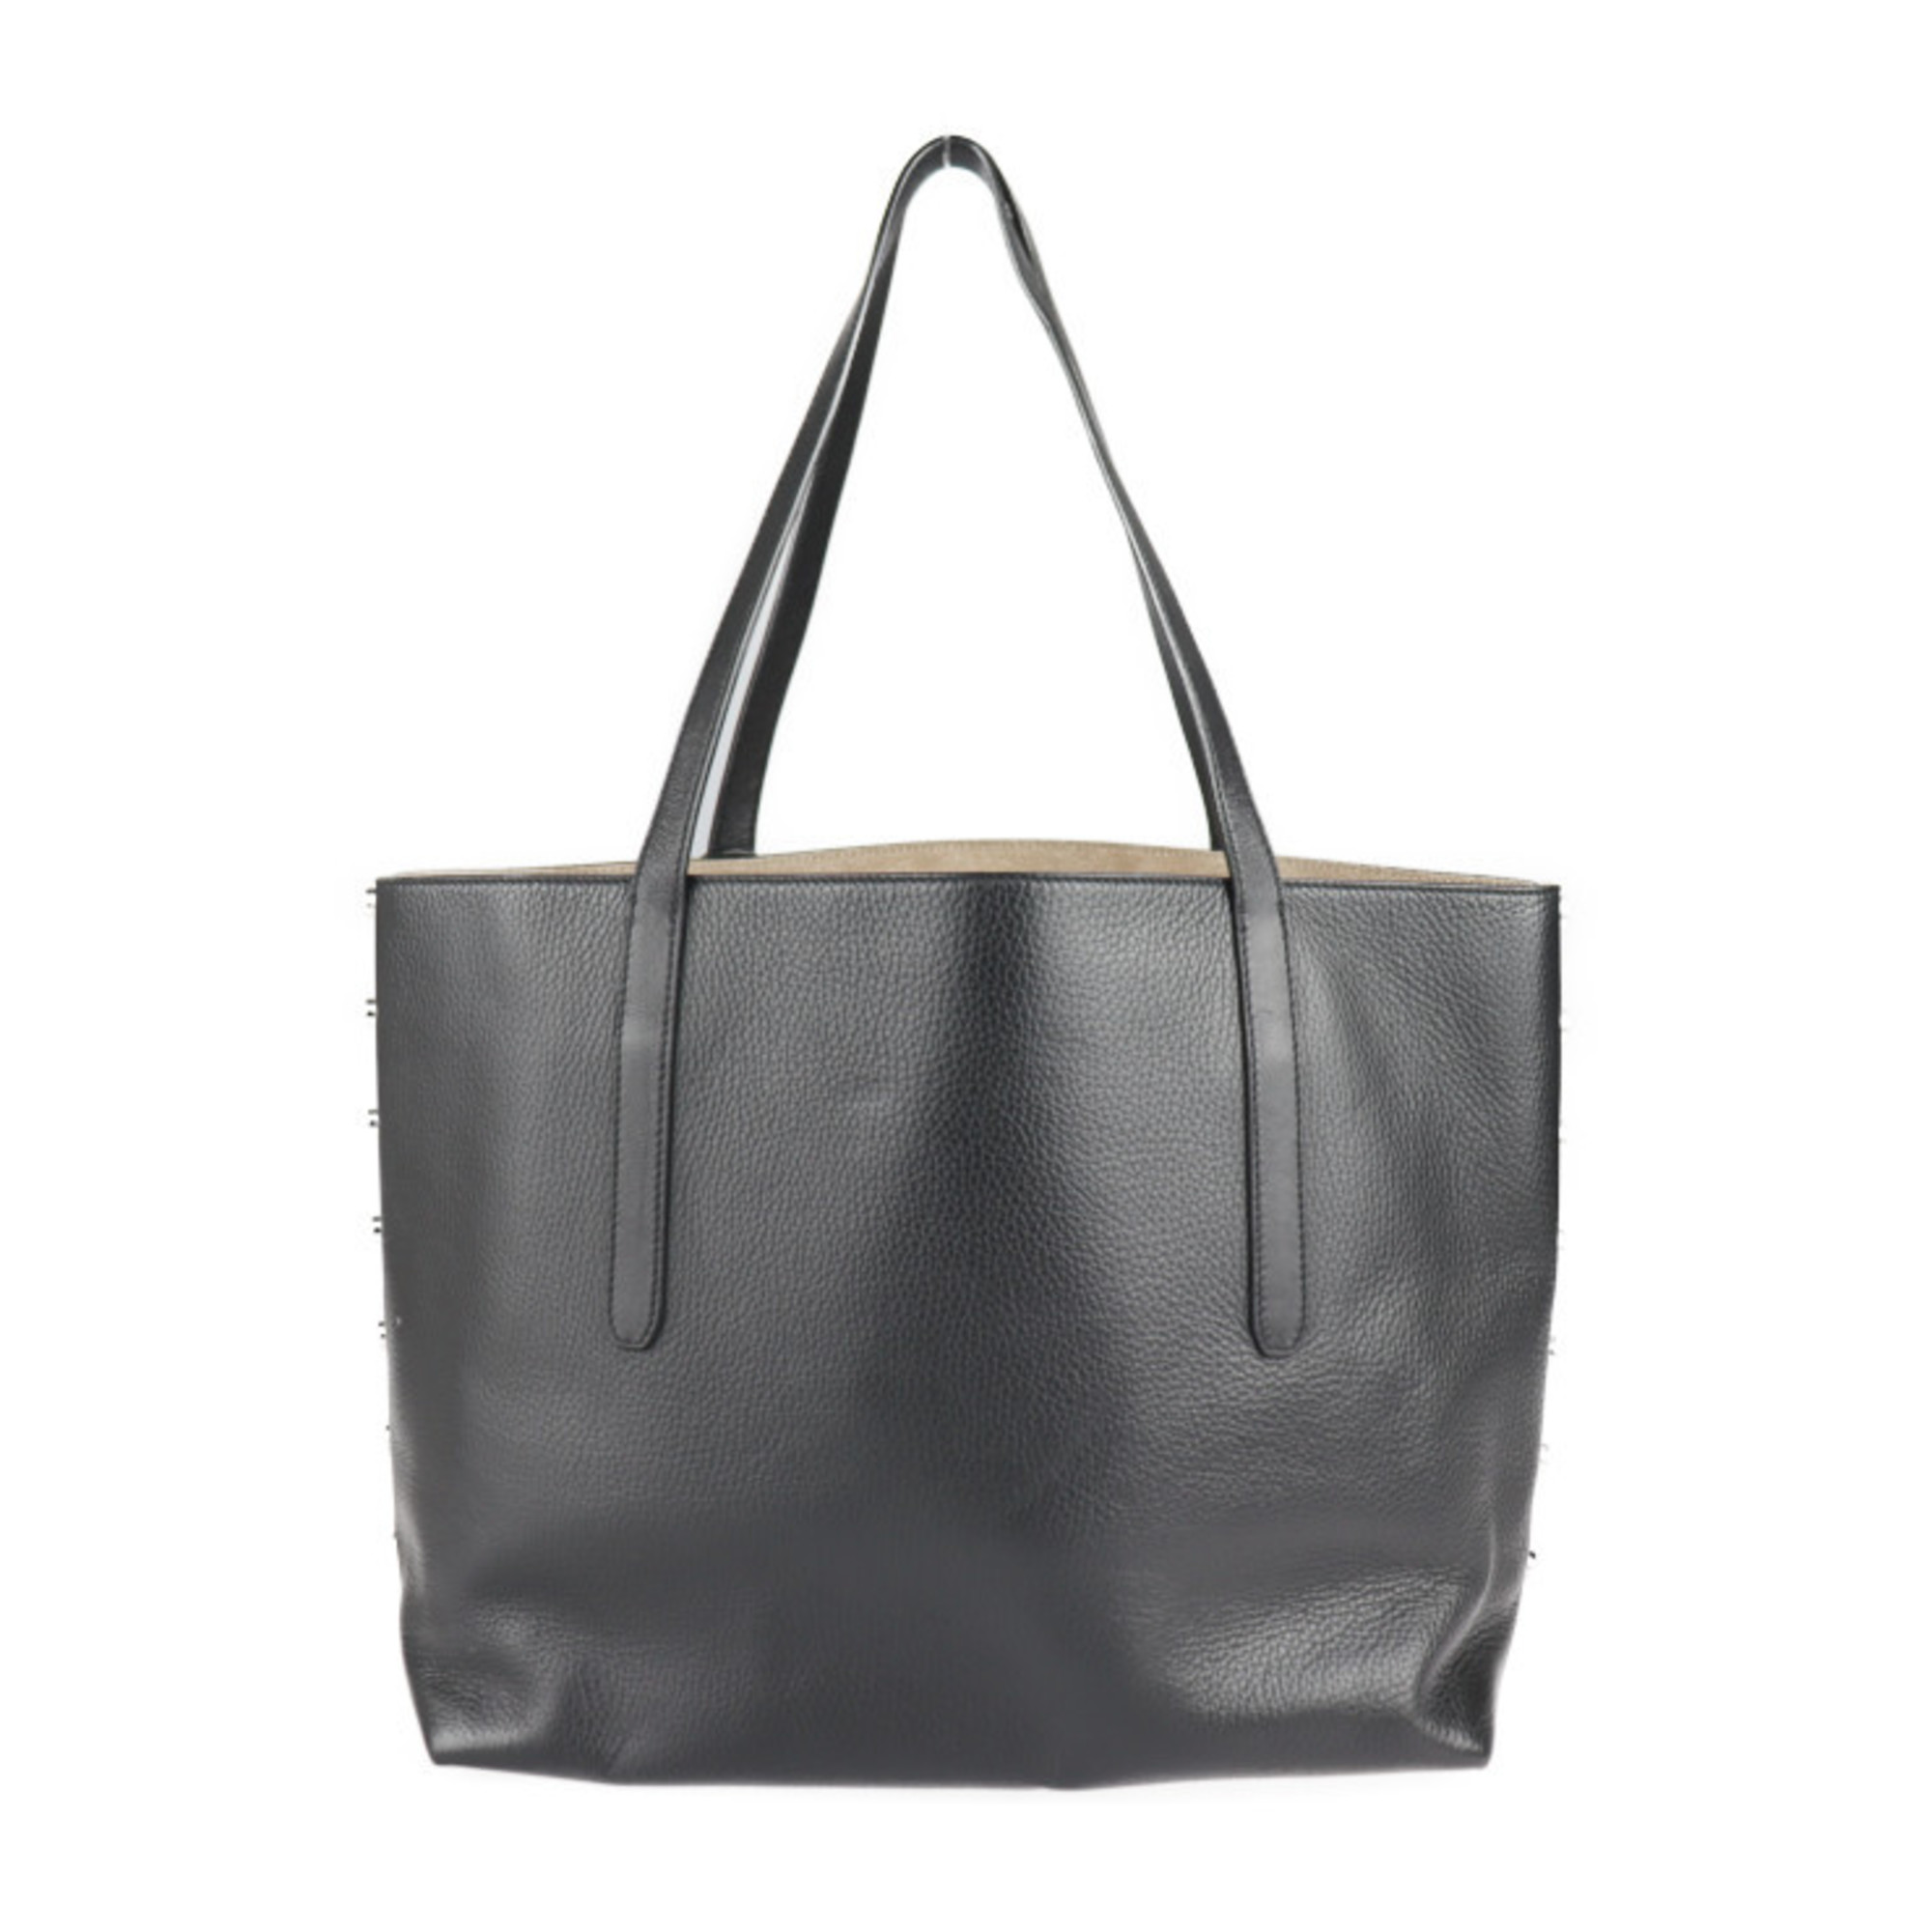 JIMMY CHOO Jimmy Choo Twist East West Tote Bag Leather Black Bordeaux Handbag Shoulder Shopping Bicolor